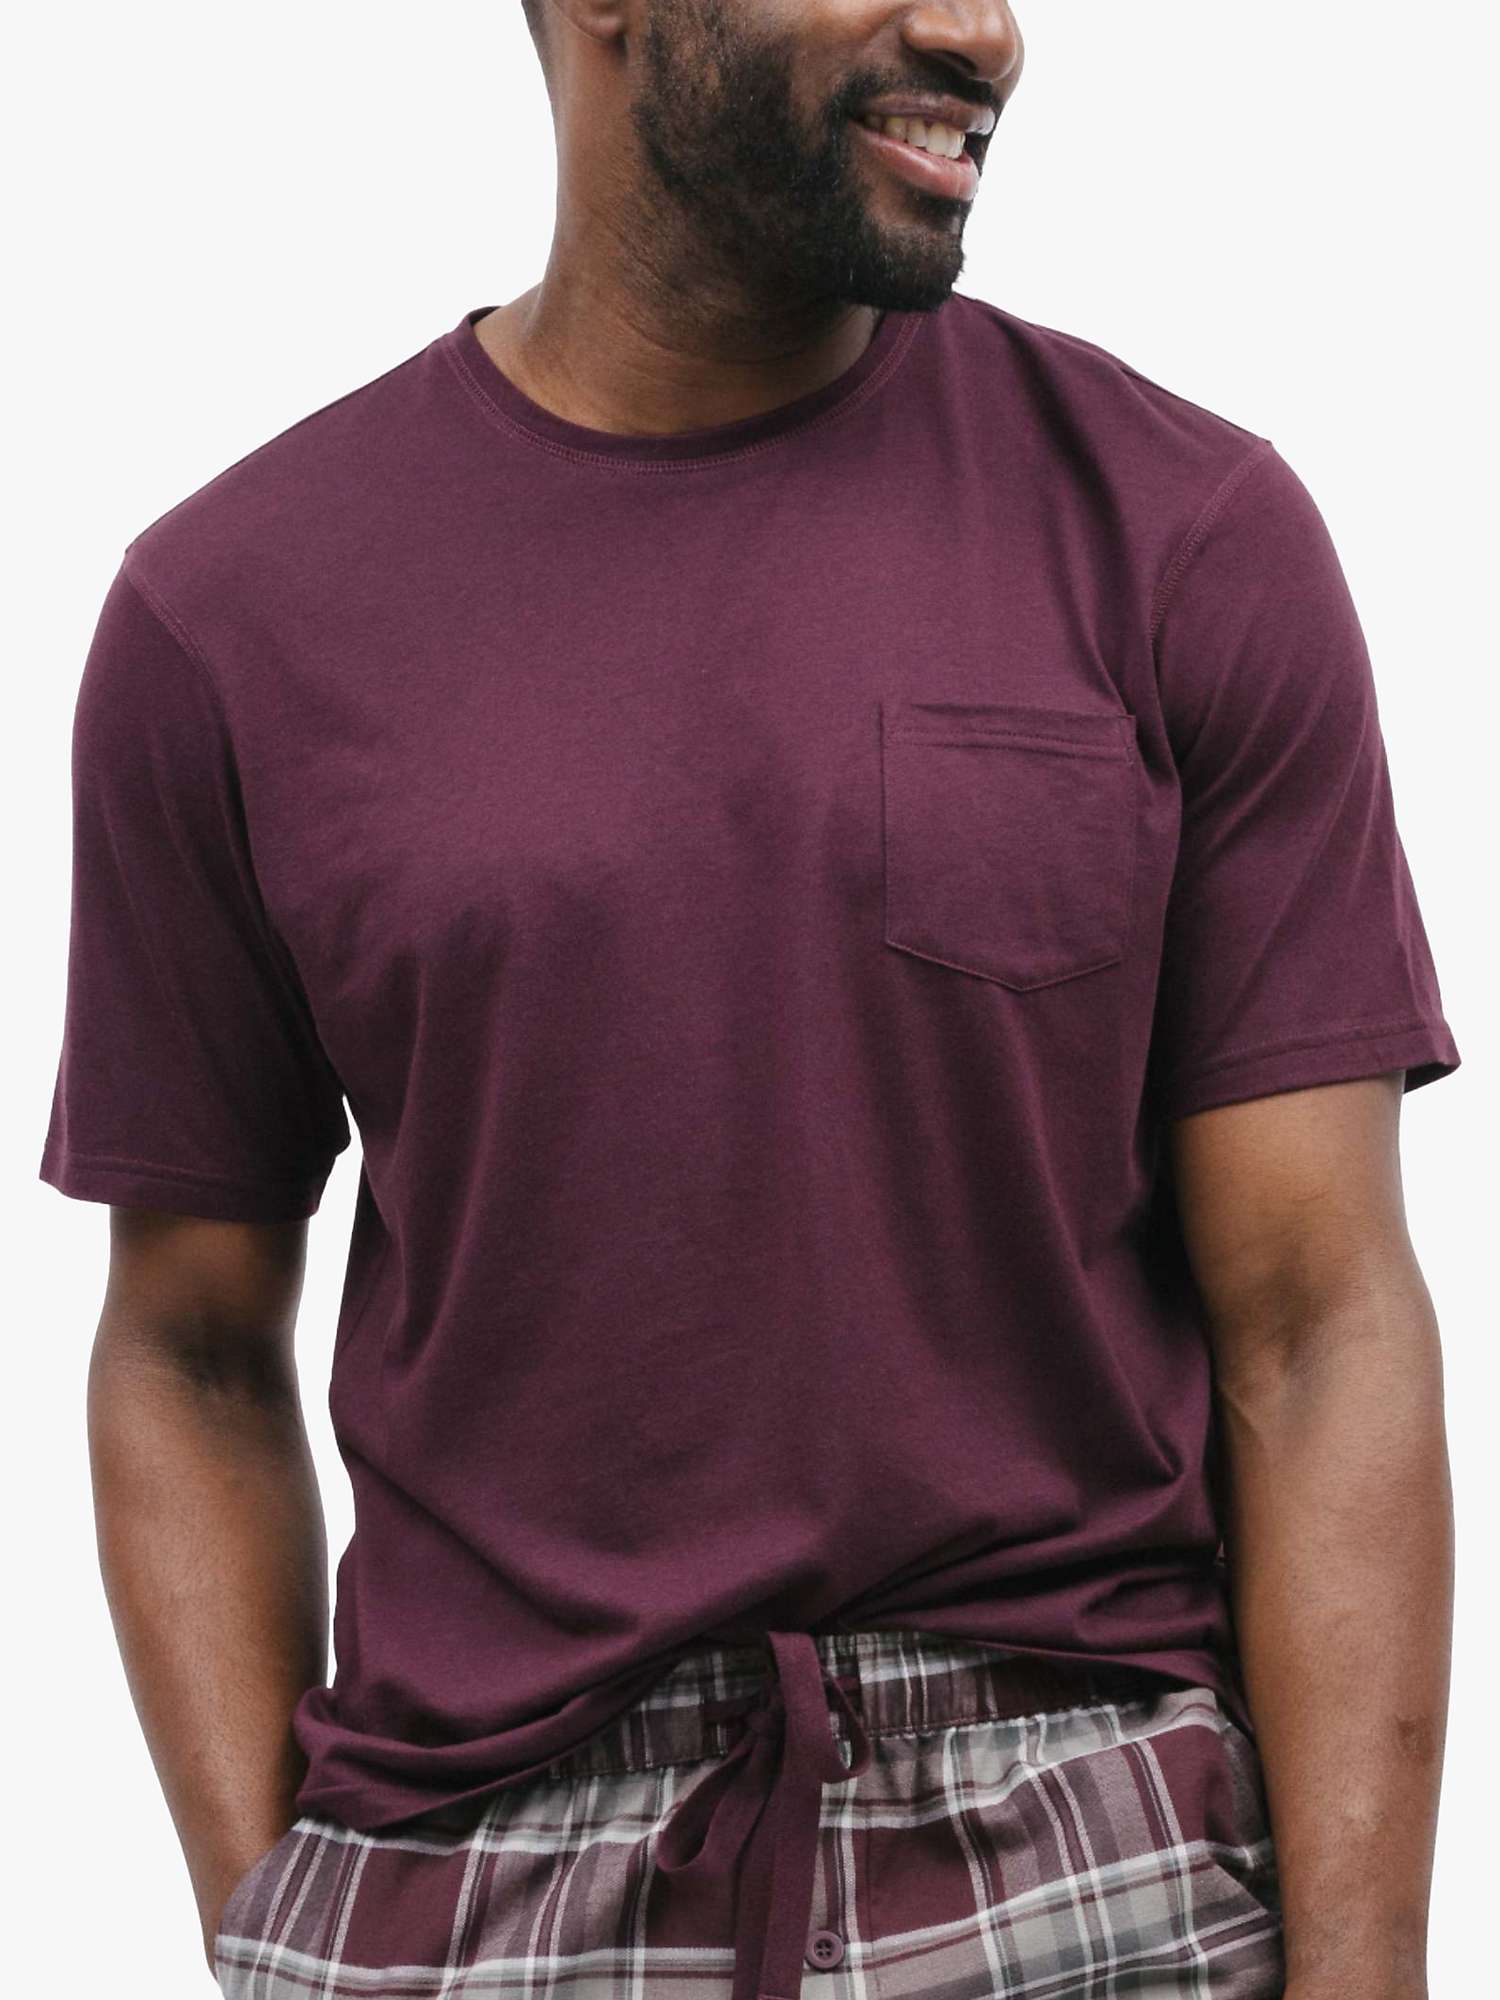 Buy Cyberjammies Spencer Short Sleeve Jersey T-Shirt, Burgundy Online at johnlewis.com